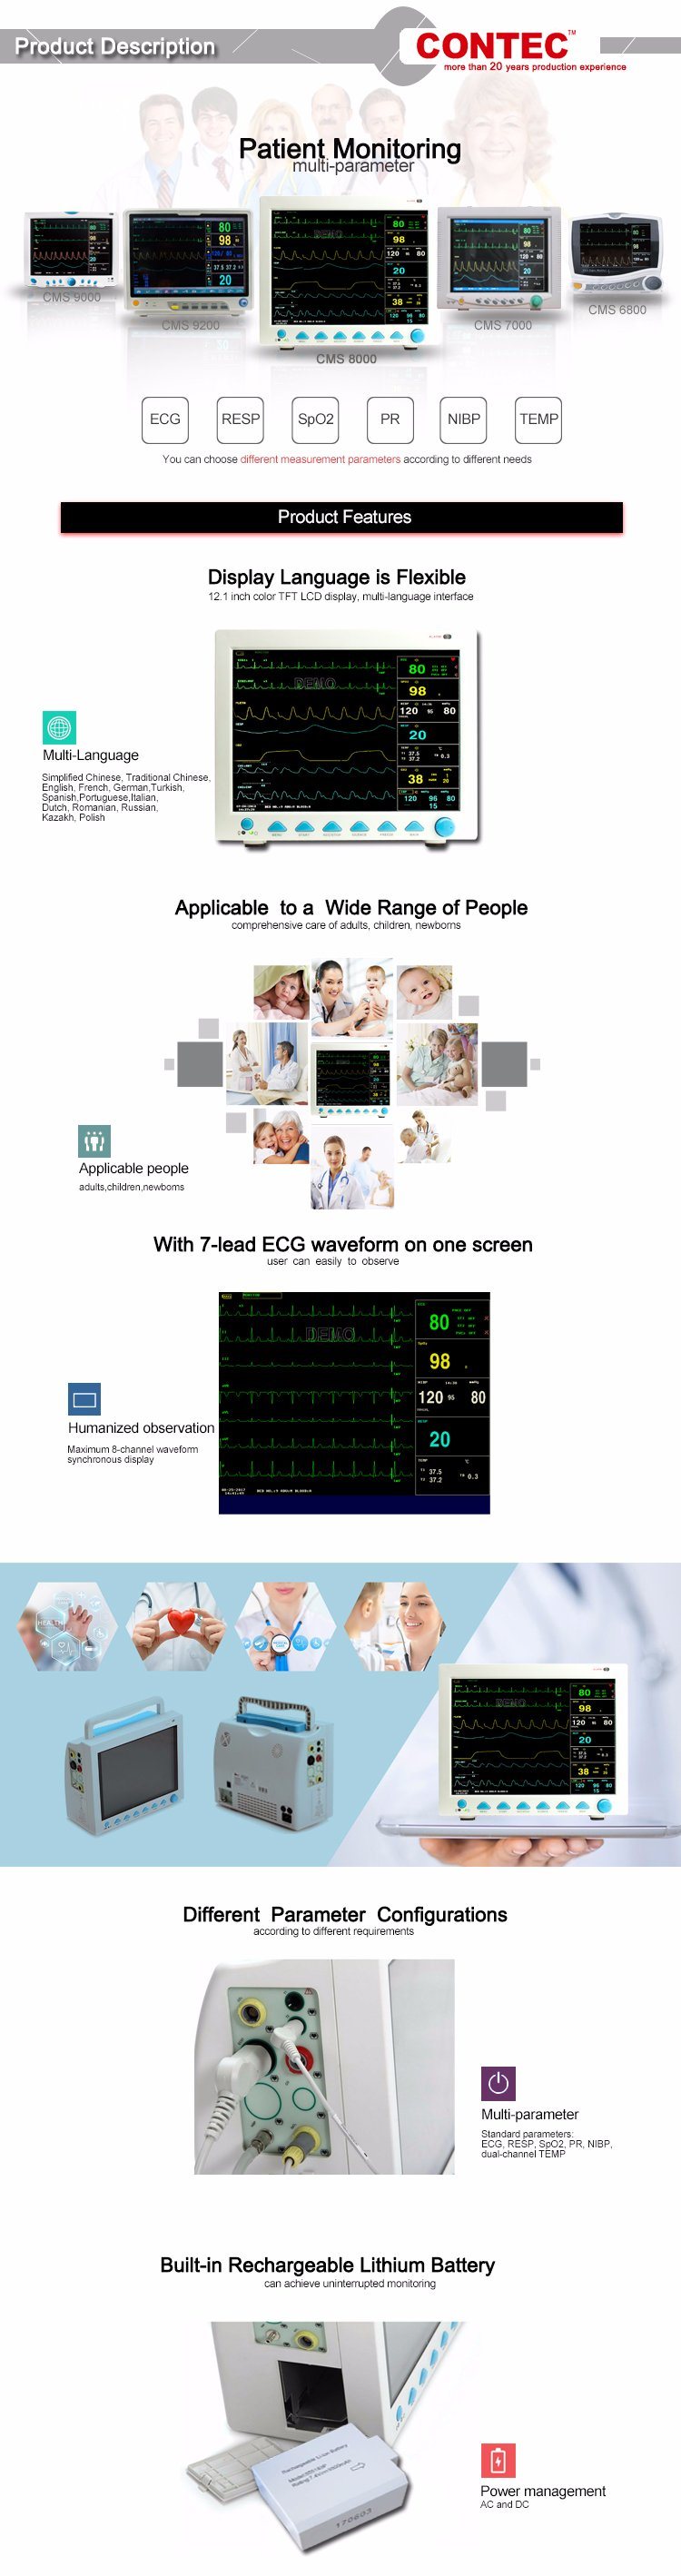 Contec Cms8000 Cheap Multi-Parameter Beside Portable Cardiac ECG Patient Monitor FDA